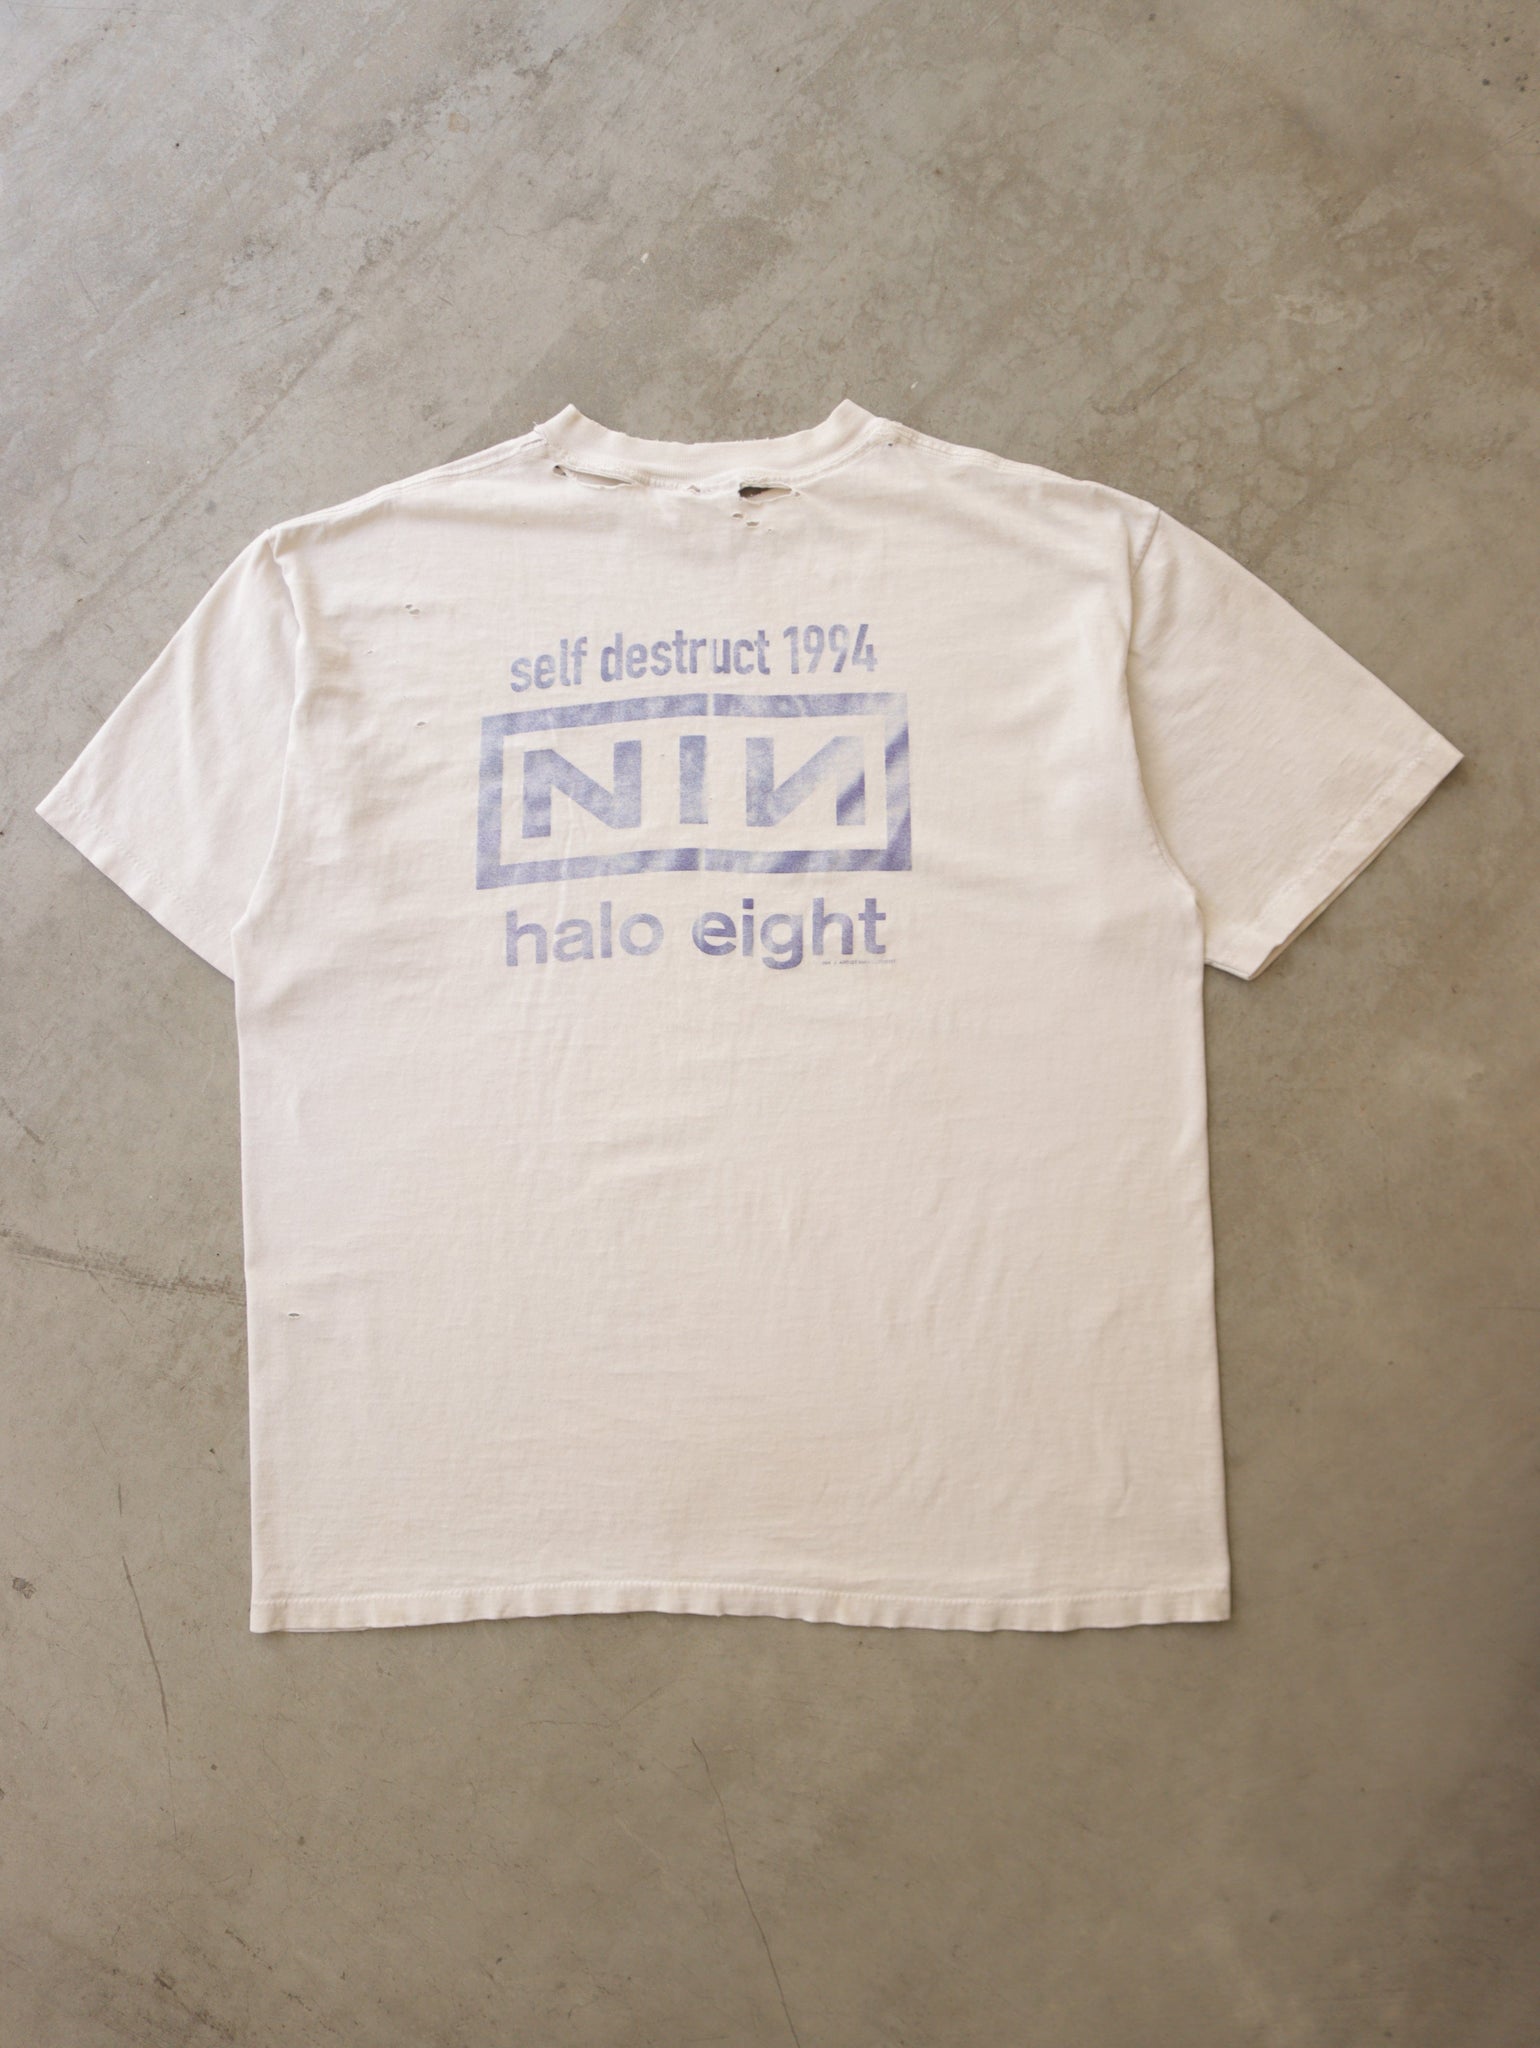 1994 NINE INCH NAILS 'HALO EIGHT' BAND TEE - XL